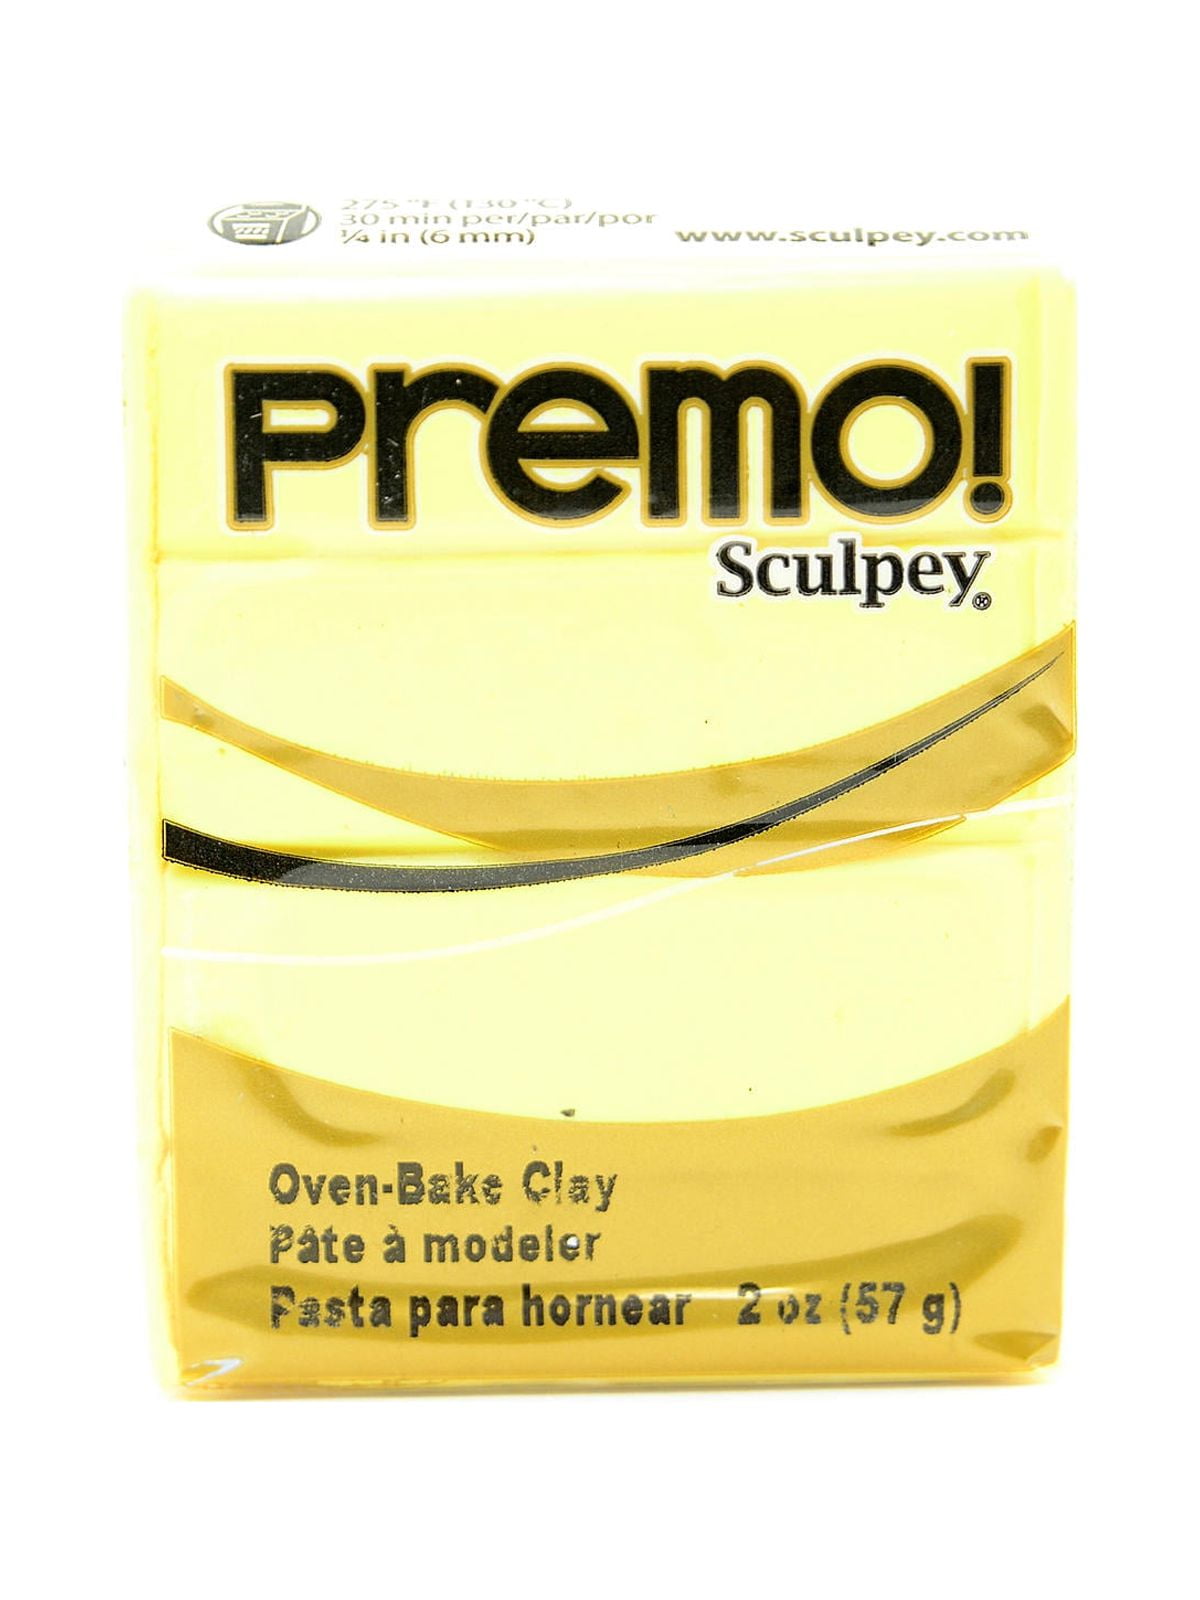 Premo Premium Polymer Clay translucent white, 2 oz. (pack of 5) 